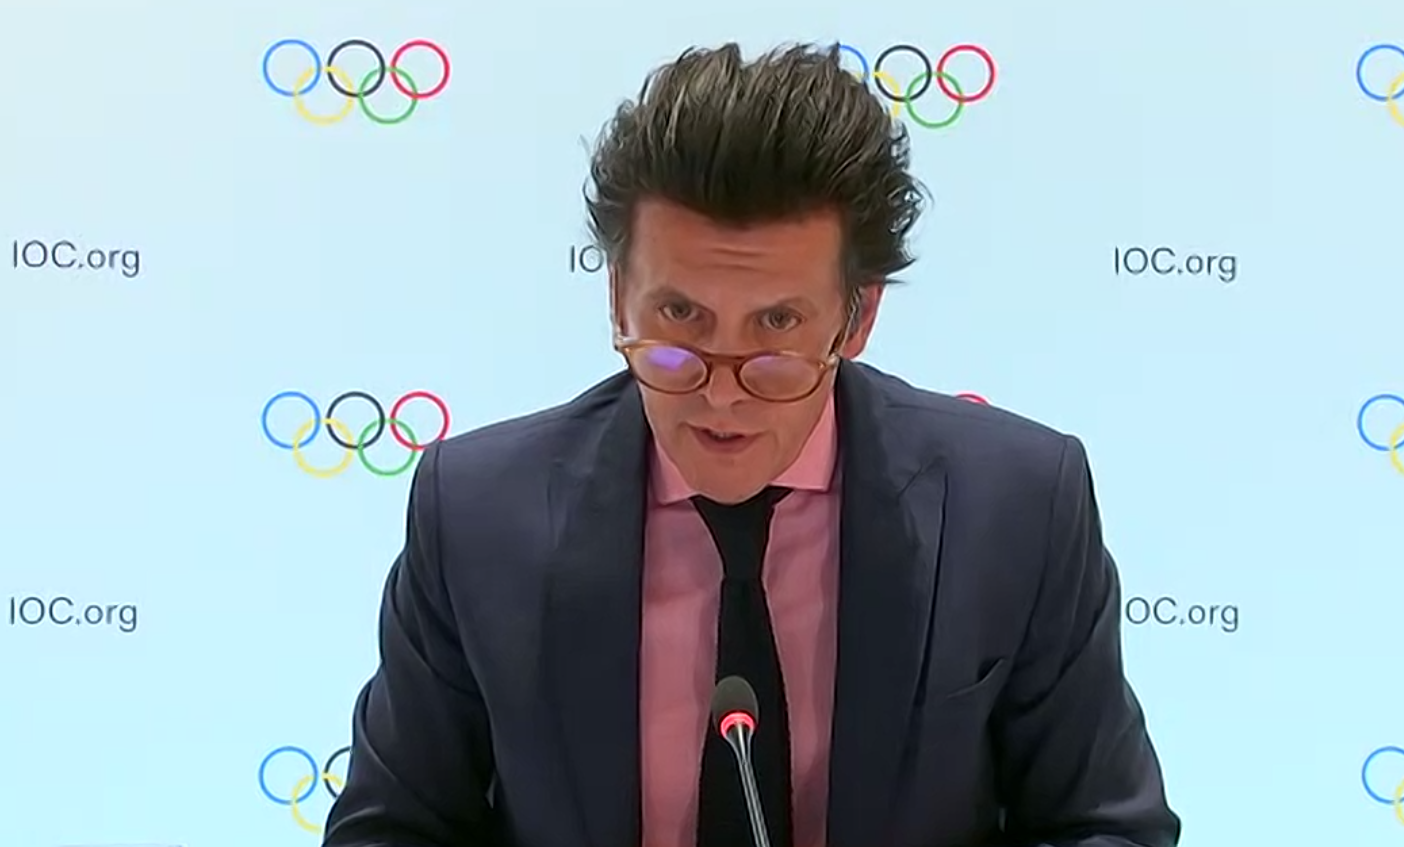 Growing interest in hosting 2030 Winter Olympics, IOC claim